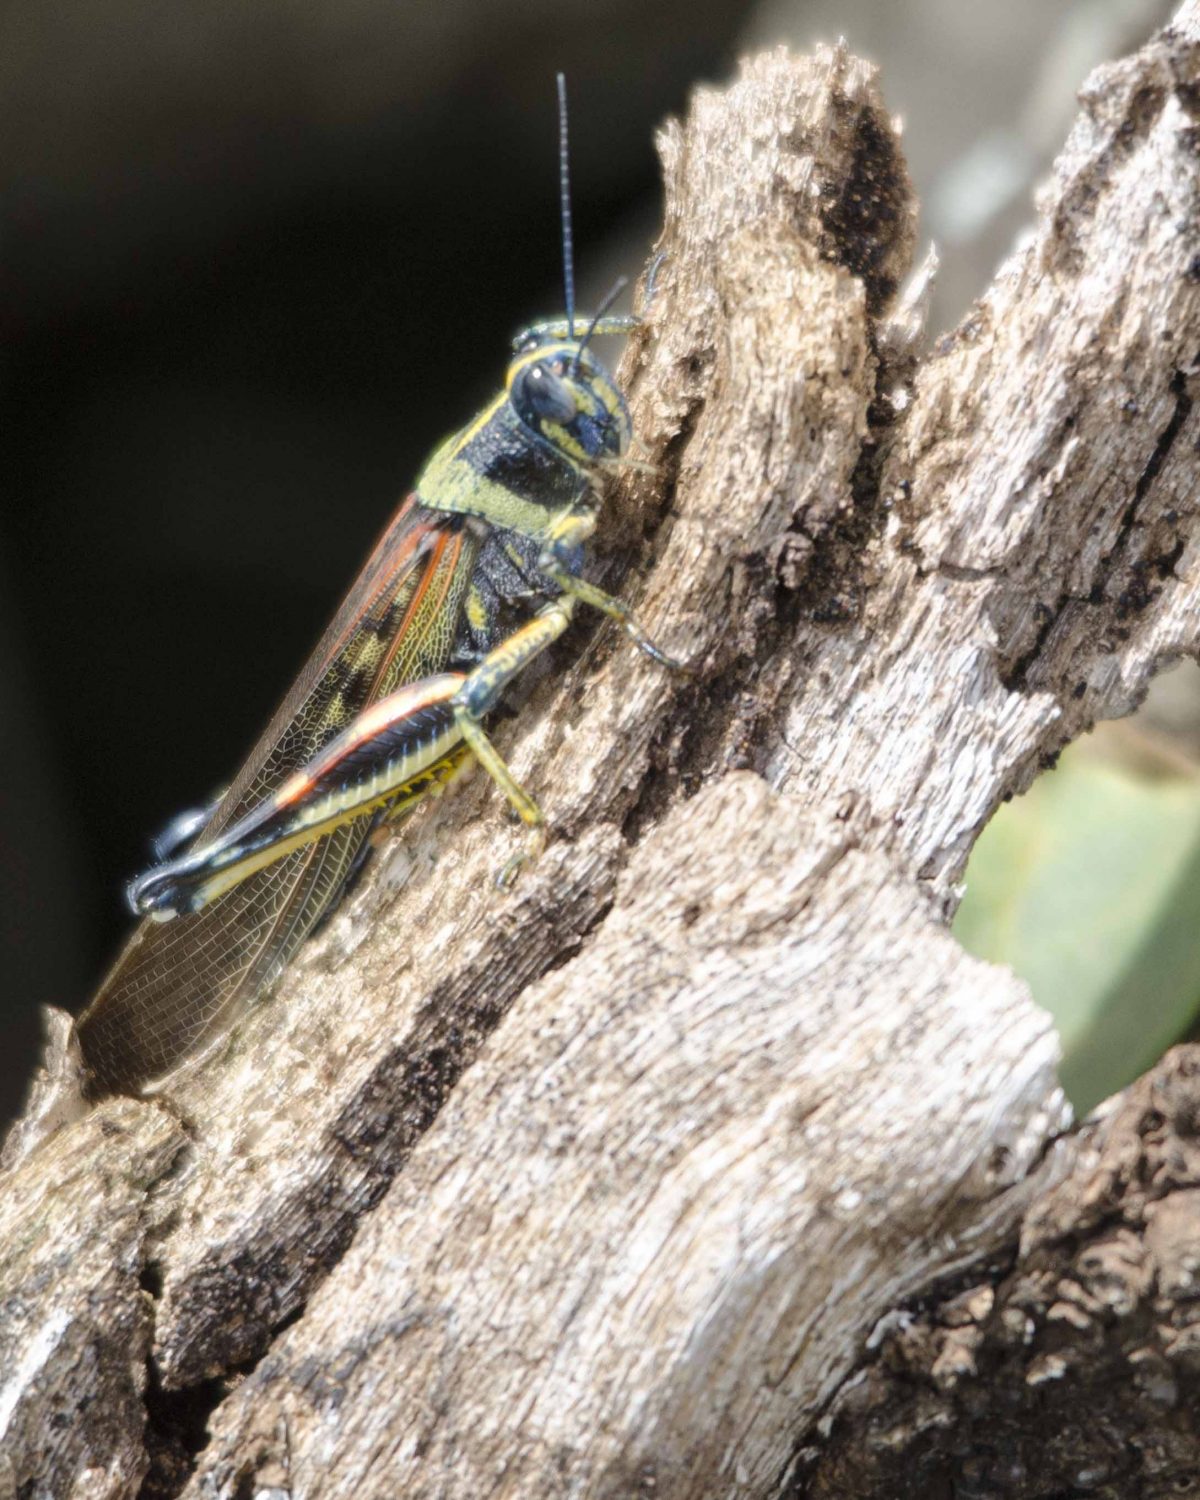 Grasshopper, Charles Darwin Research Center, San Cruz Island, The Galapagos